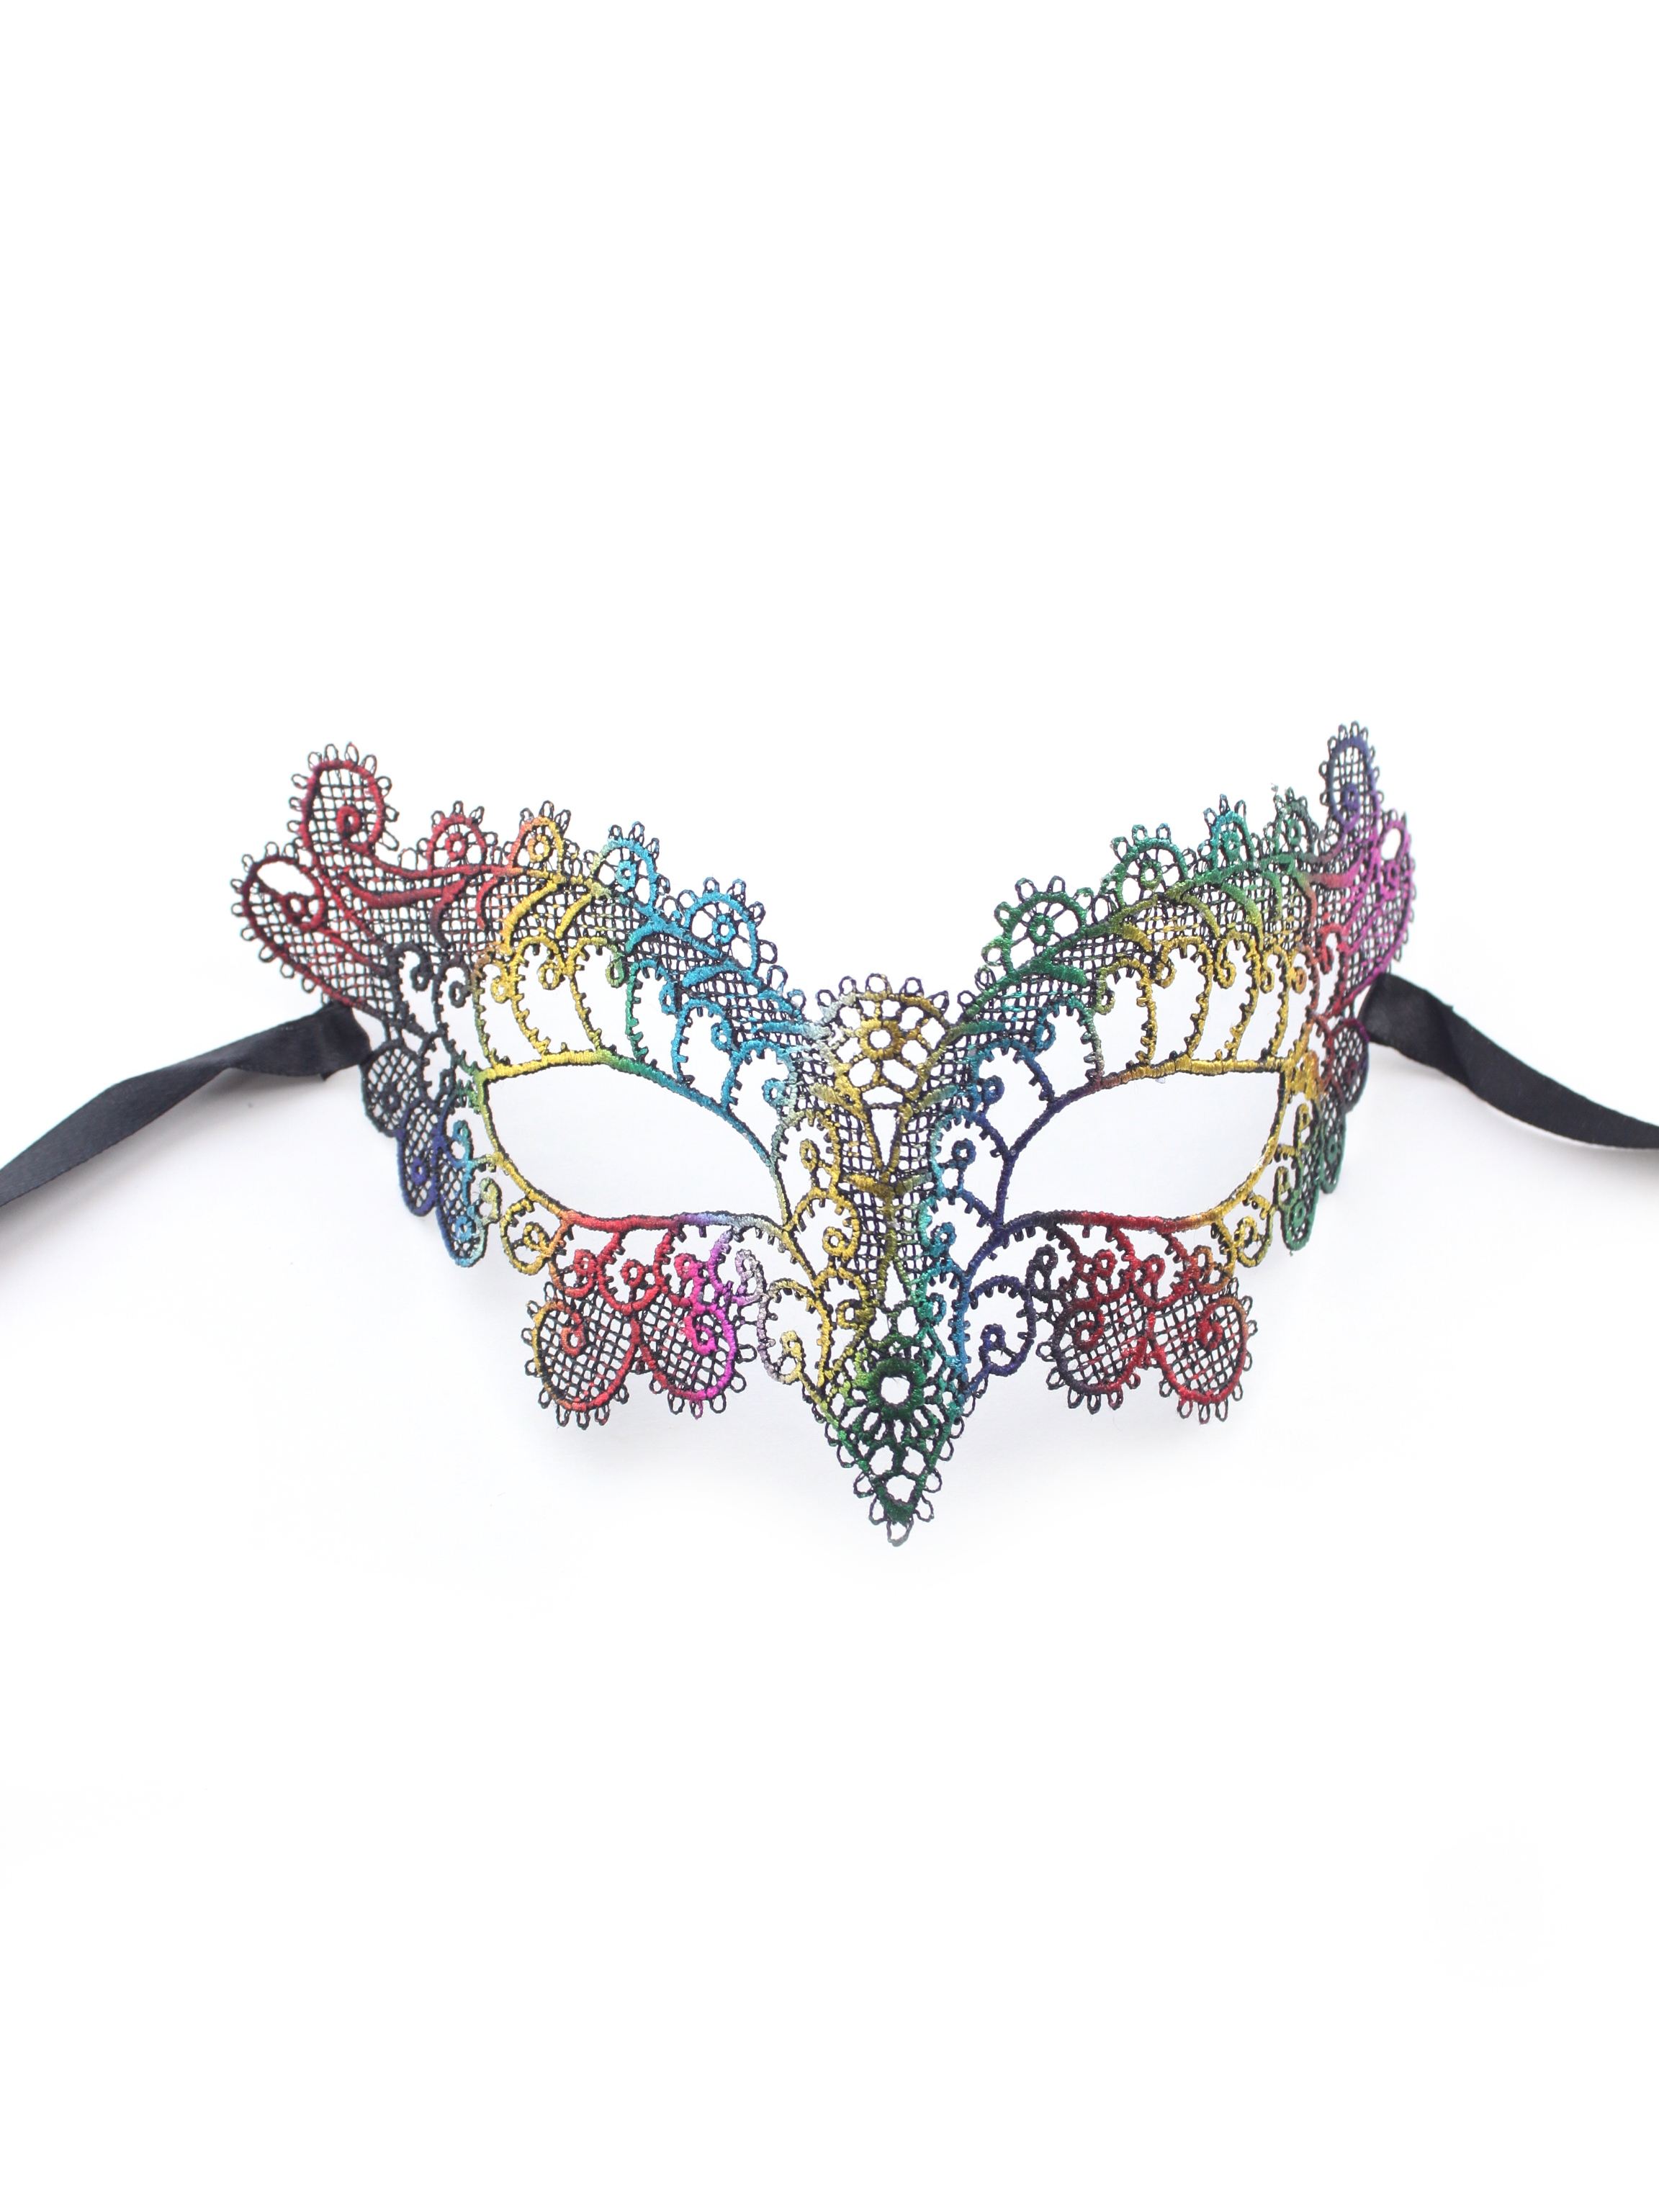 rainbow-pride-baroque-lace-eye-mask-masquerade - Masque Boutique ...